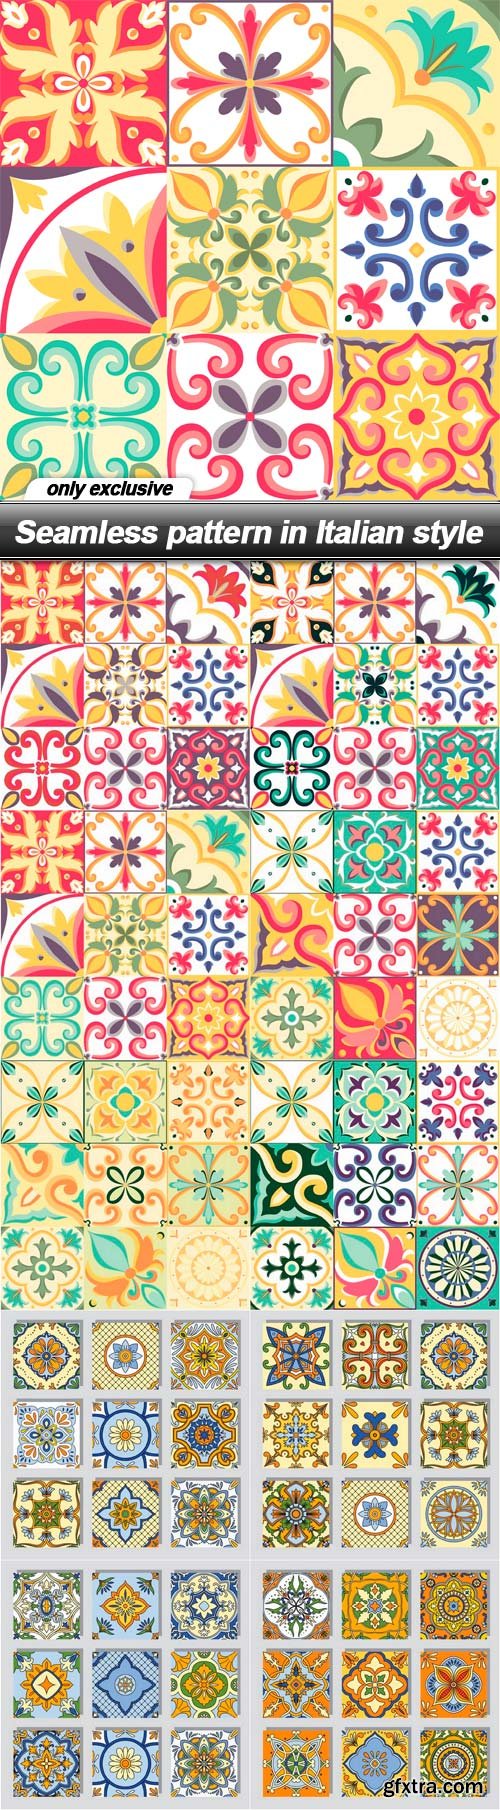 Seamless pattern in Italian style - 10 EPS